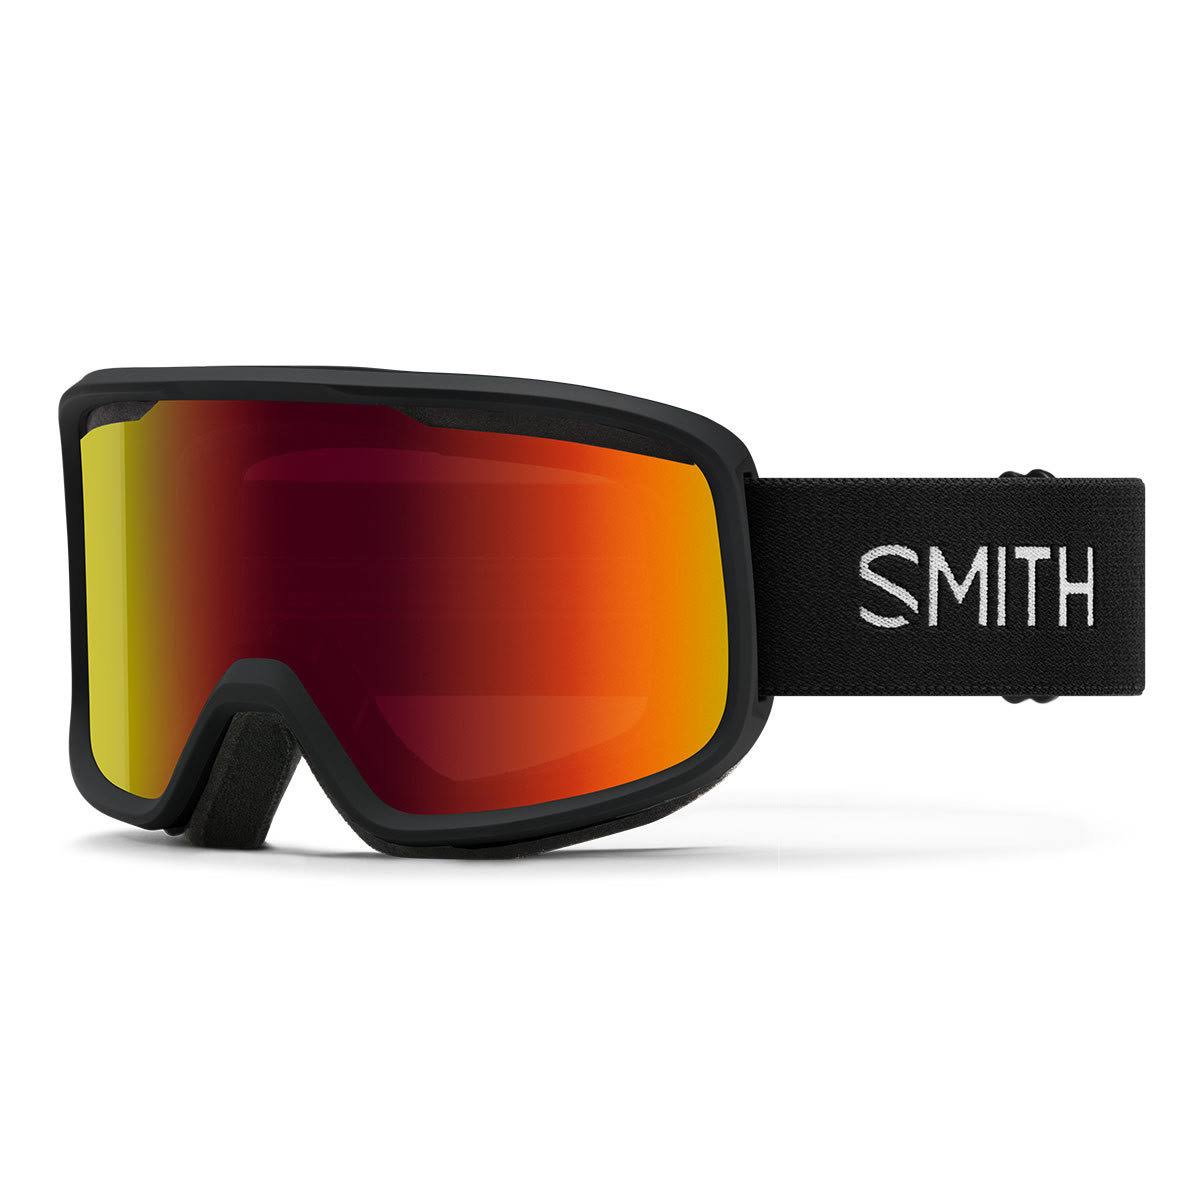 Smith Frontier Goggles Black Red Sol-X Mirror M004292QJ99C1